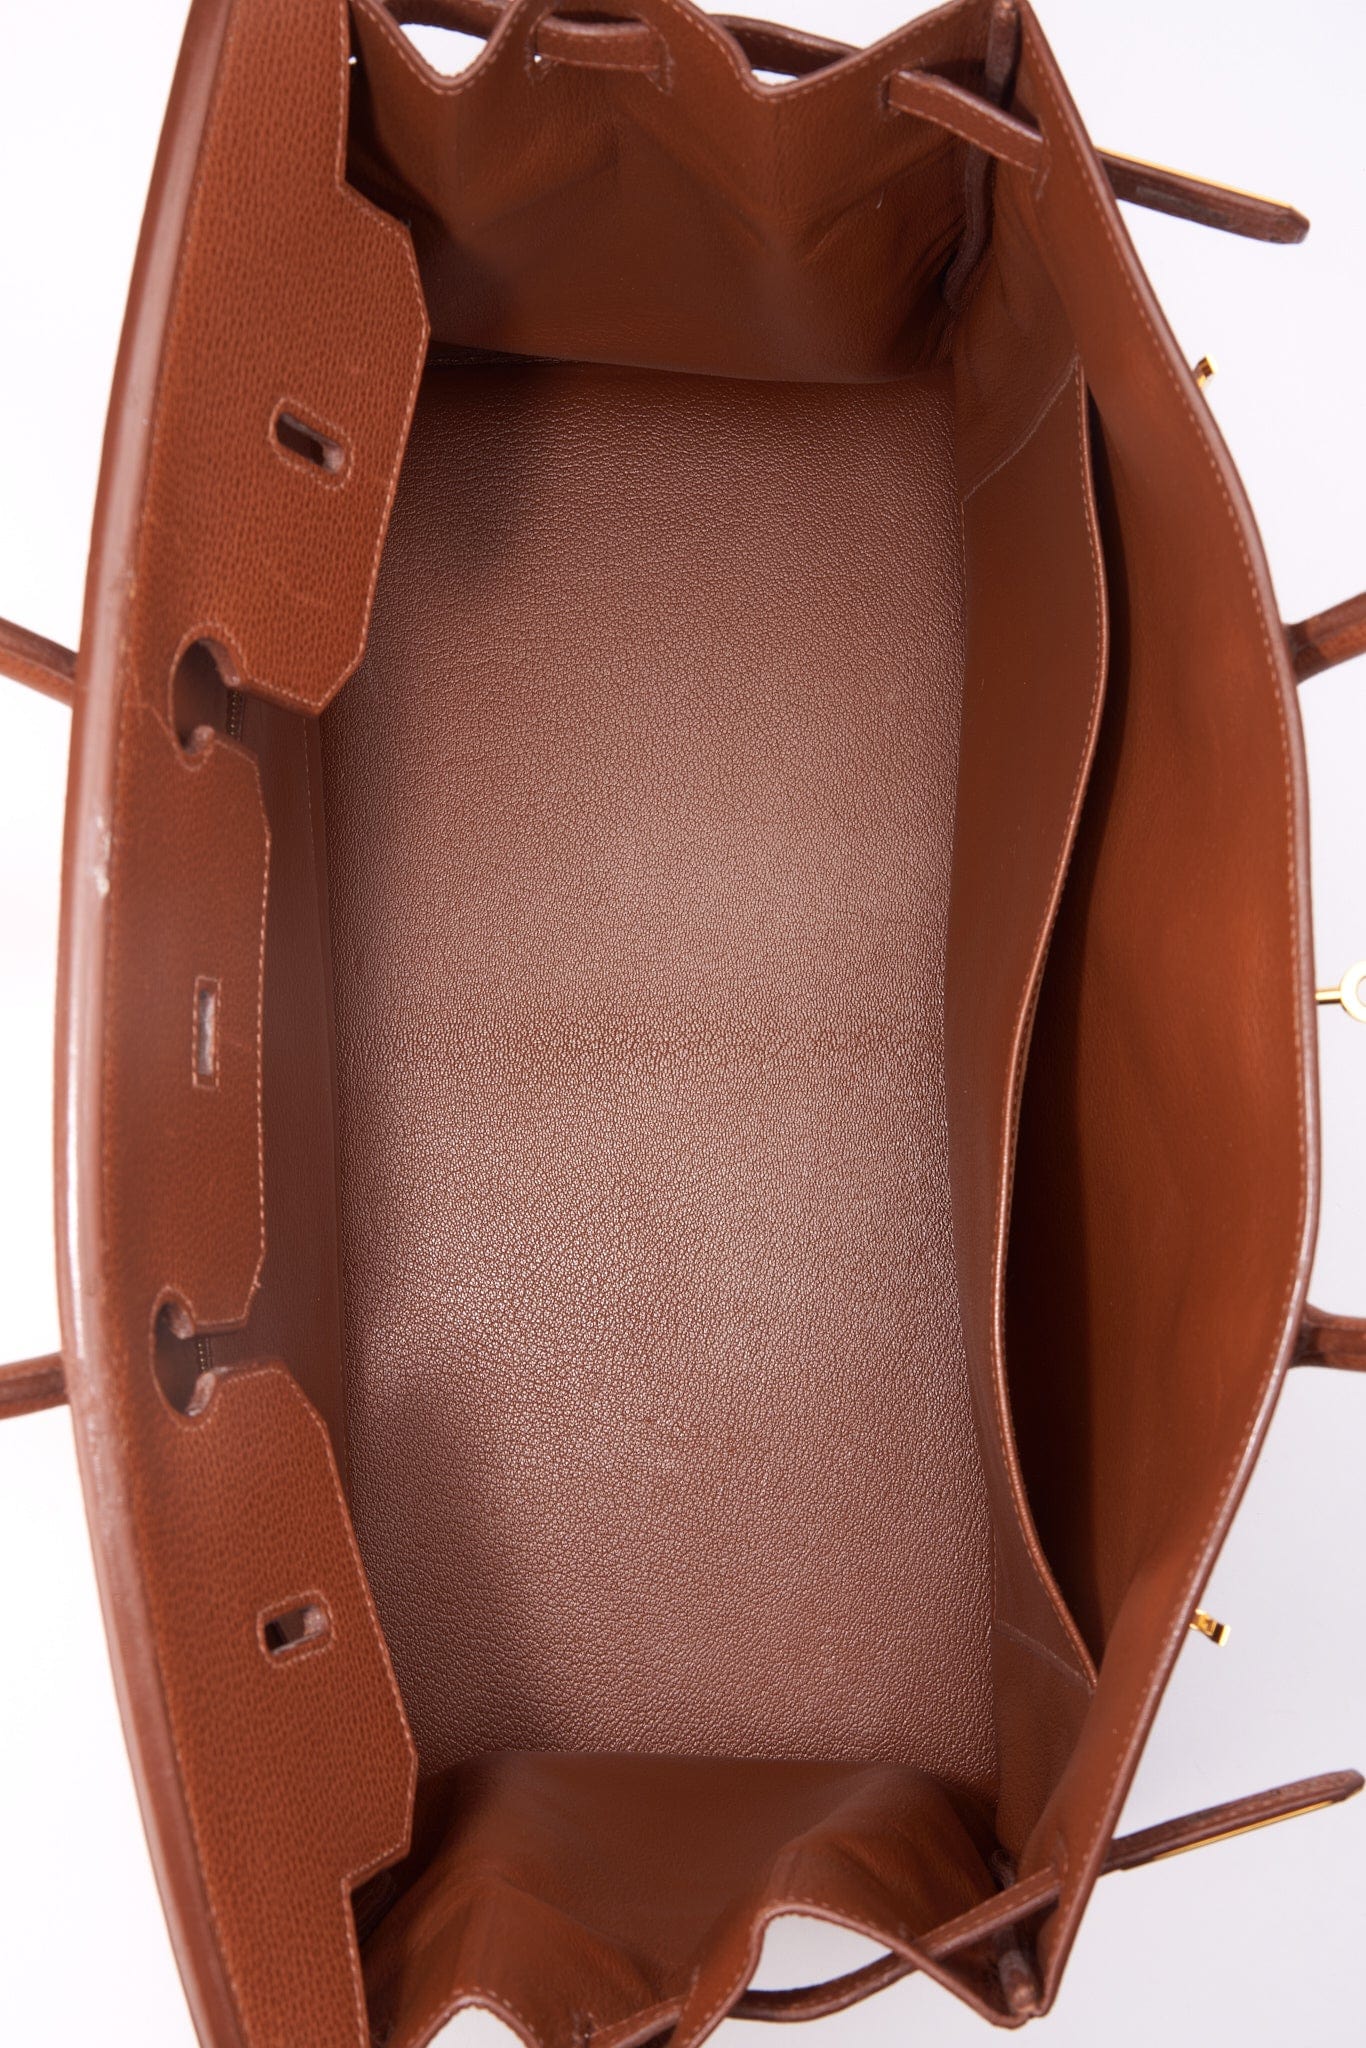 Hermès Birkin 40 Handbag in a Tan Chevre Mysore Leather